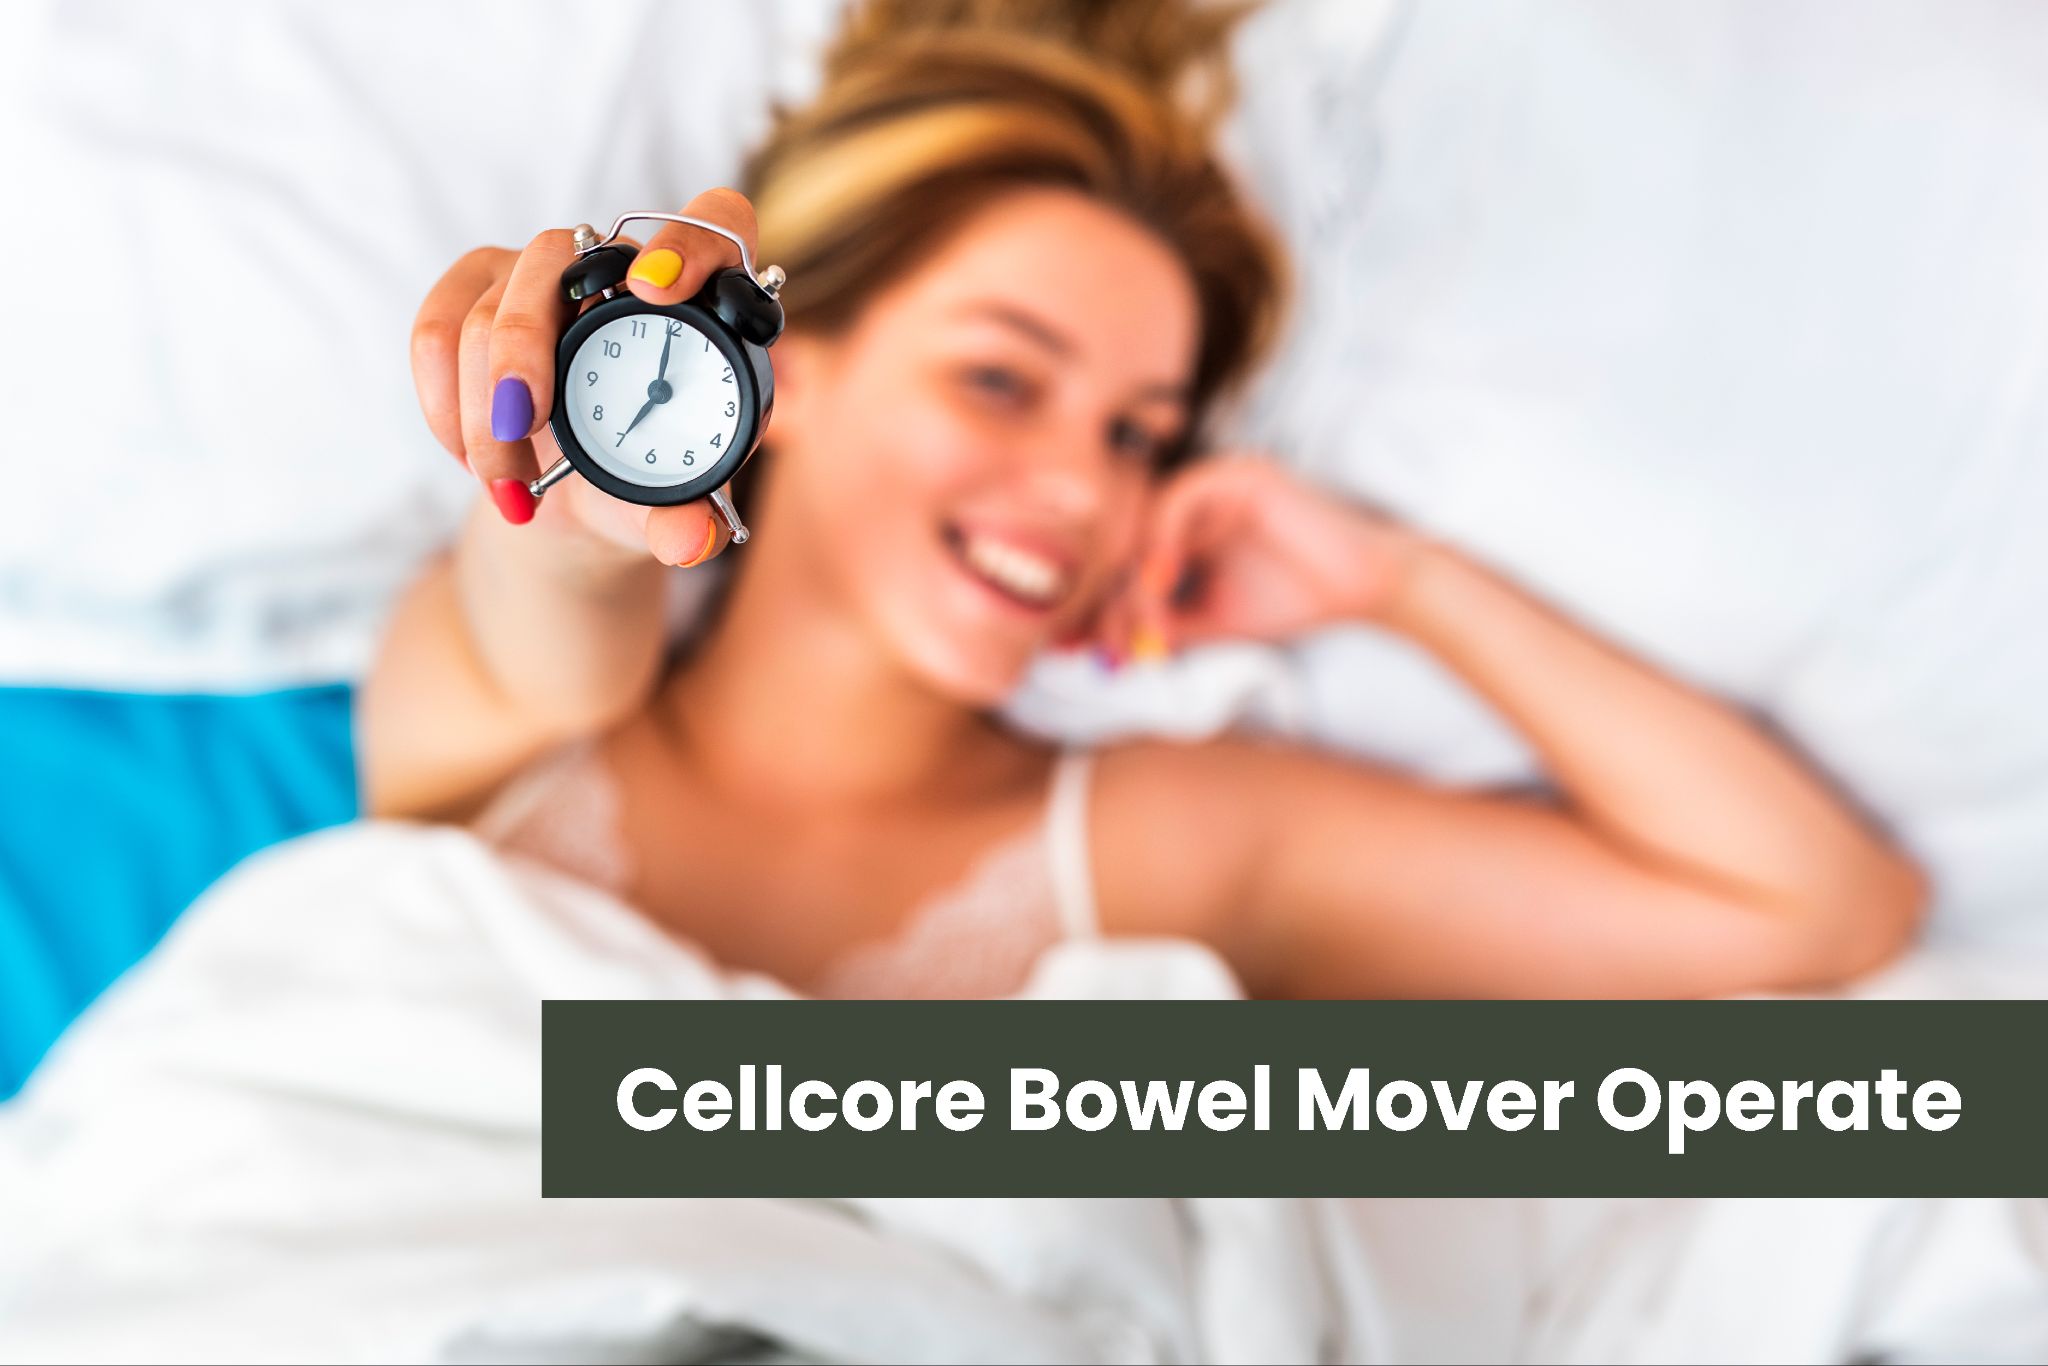 cellcore bowel mover operates